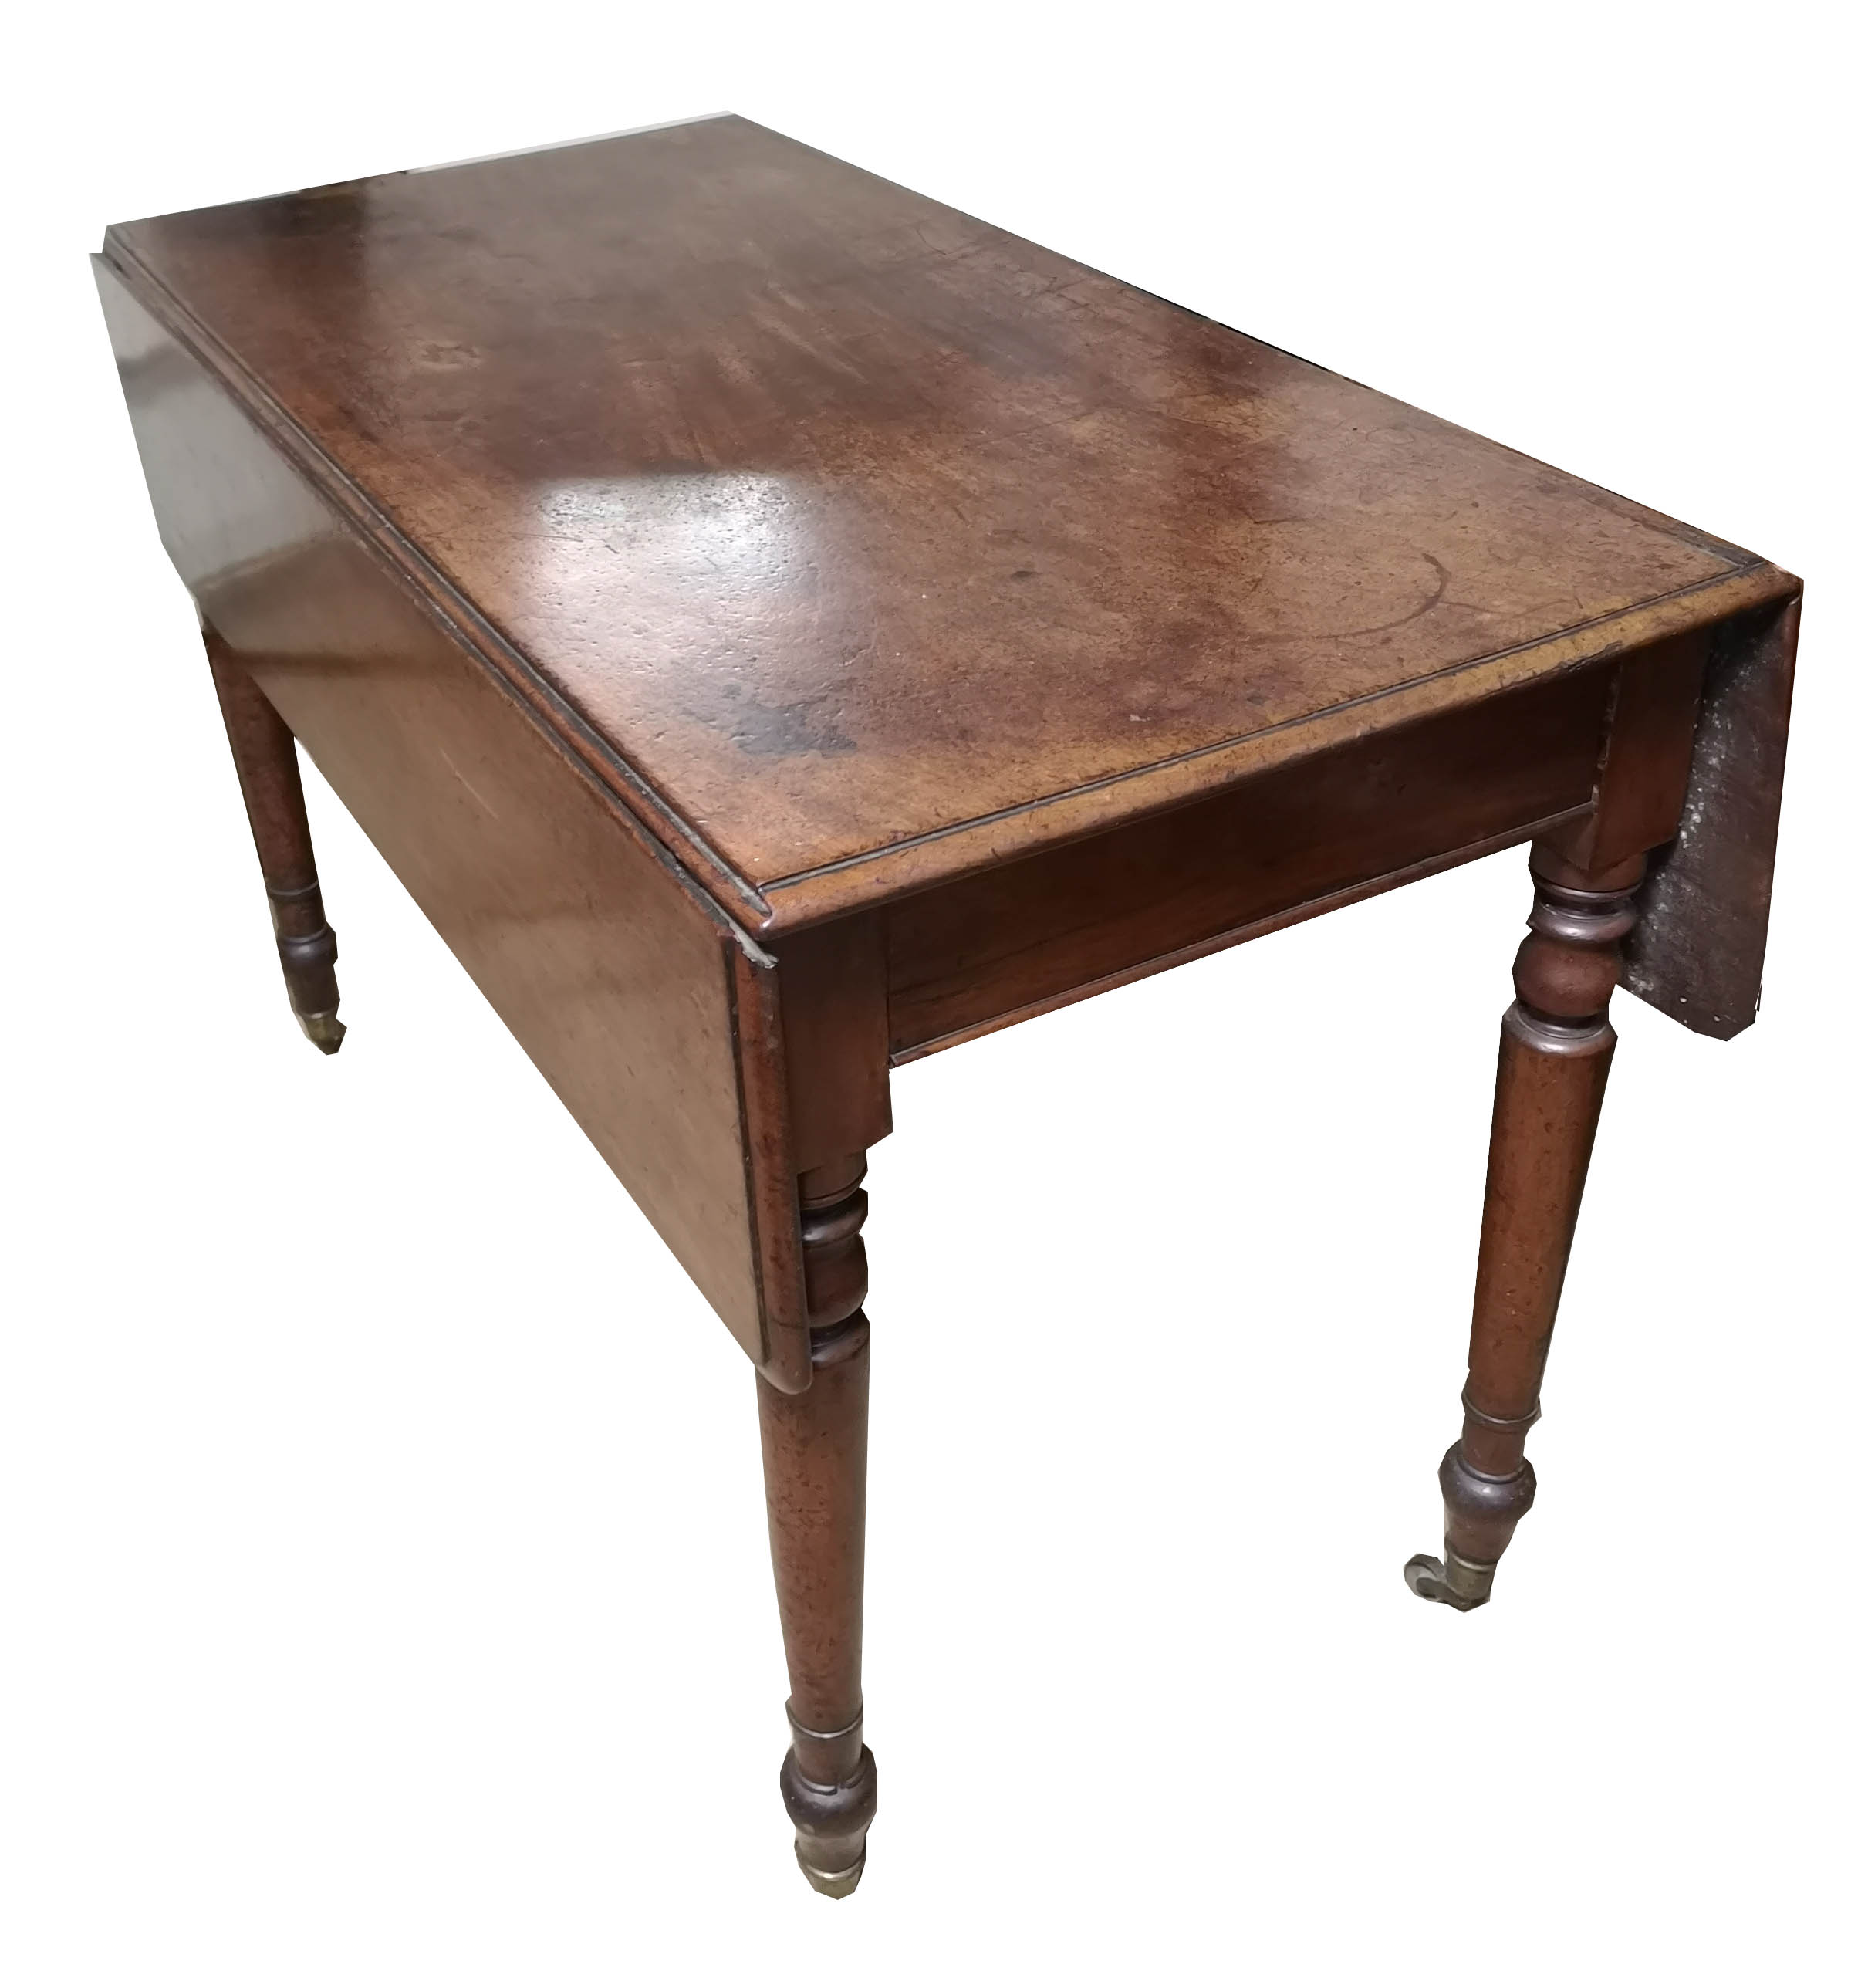 A 19TH CENTURY MAHOGANY PEMBROKE TABLE Raised on turned legs. (h 72cm x l 104cm x w 52cm)